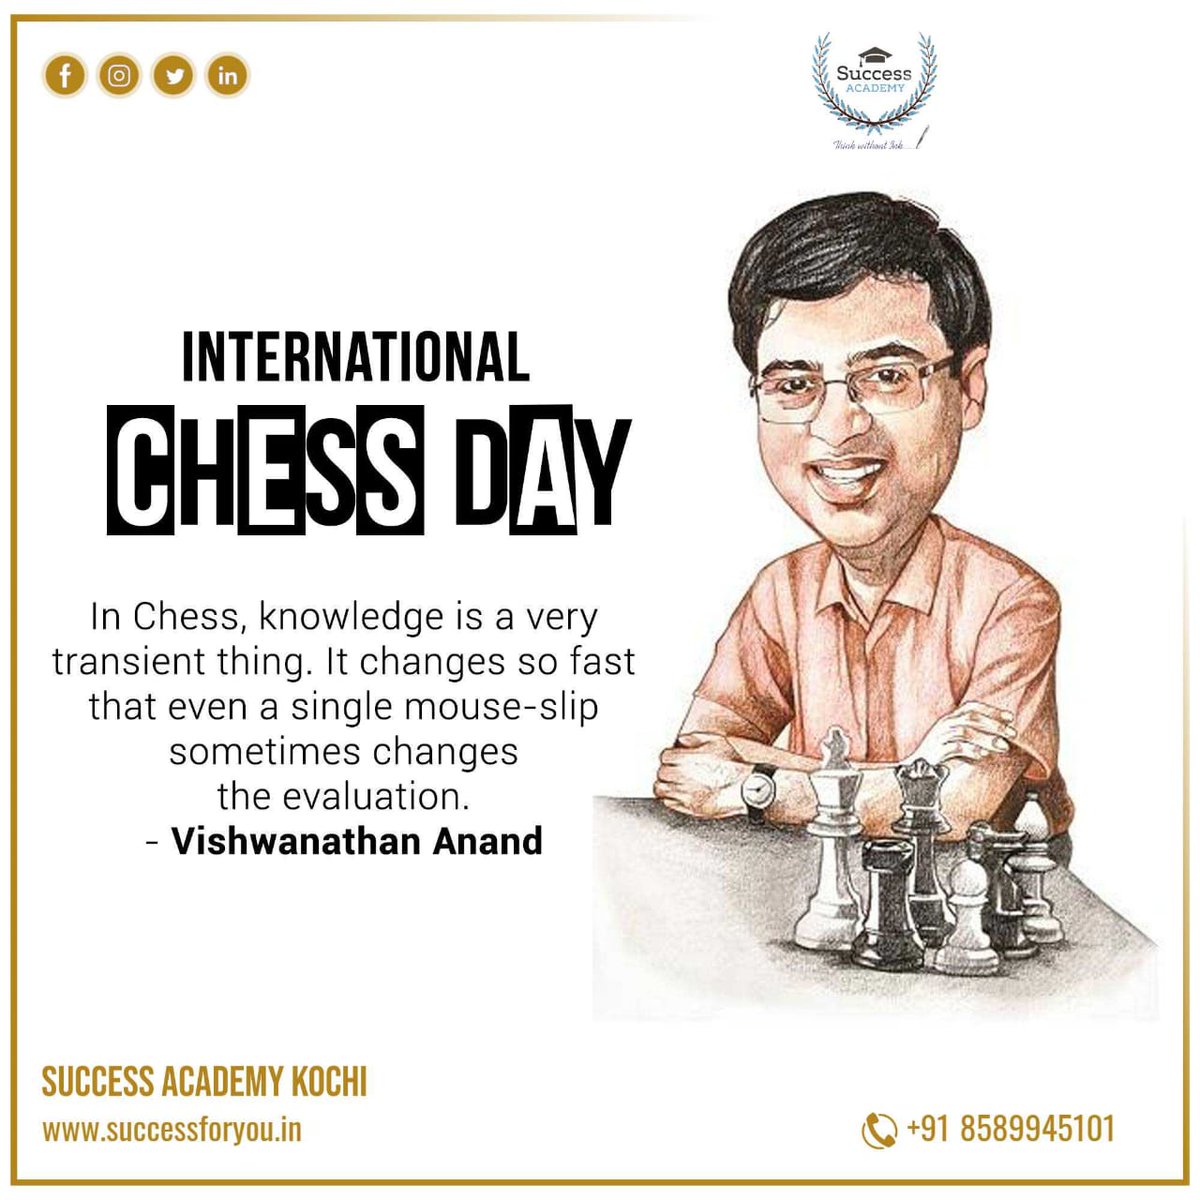 #ChessDay #InternationalChessDay #ChessMasters #CheckmateCelebration #LoveForChess #ChessPassion #ChessCommunity #MindSport #BoardGameLovers #ChessChamps #StrategicMoves #ChessTactics #ChessLife #ChessFun #GameOfKings #Checkmate #GrandmasterSkills #SuccessAcademyKochi